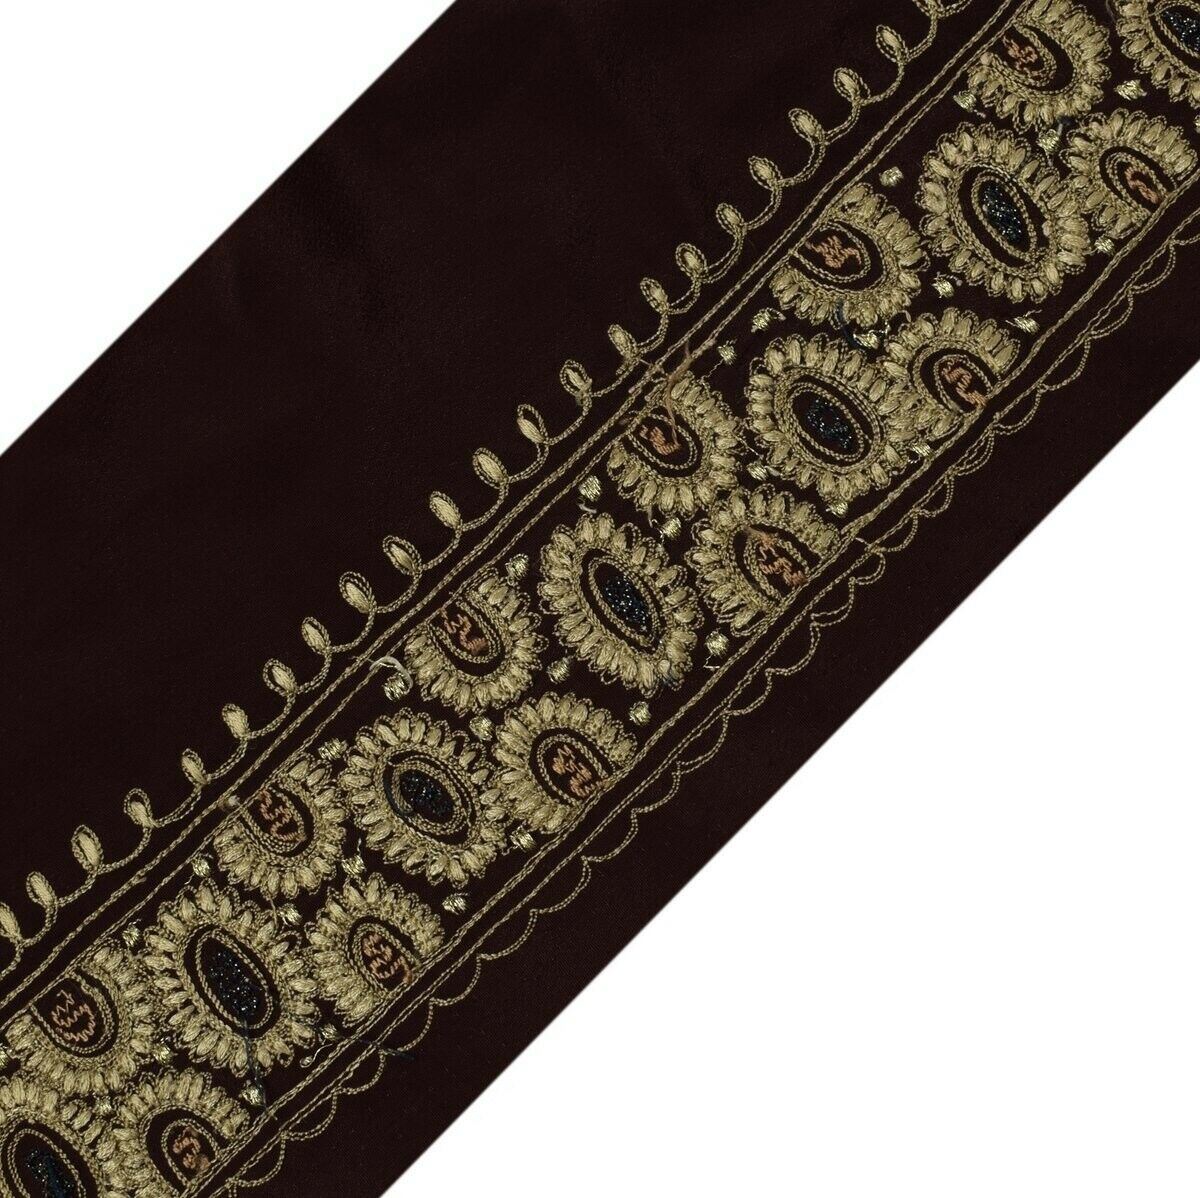 Vintage Sari Border Indian Craft Trim Embroidered Burgundy Sewing Ribbon Lace